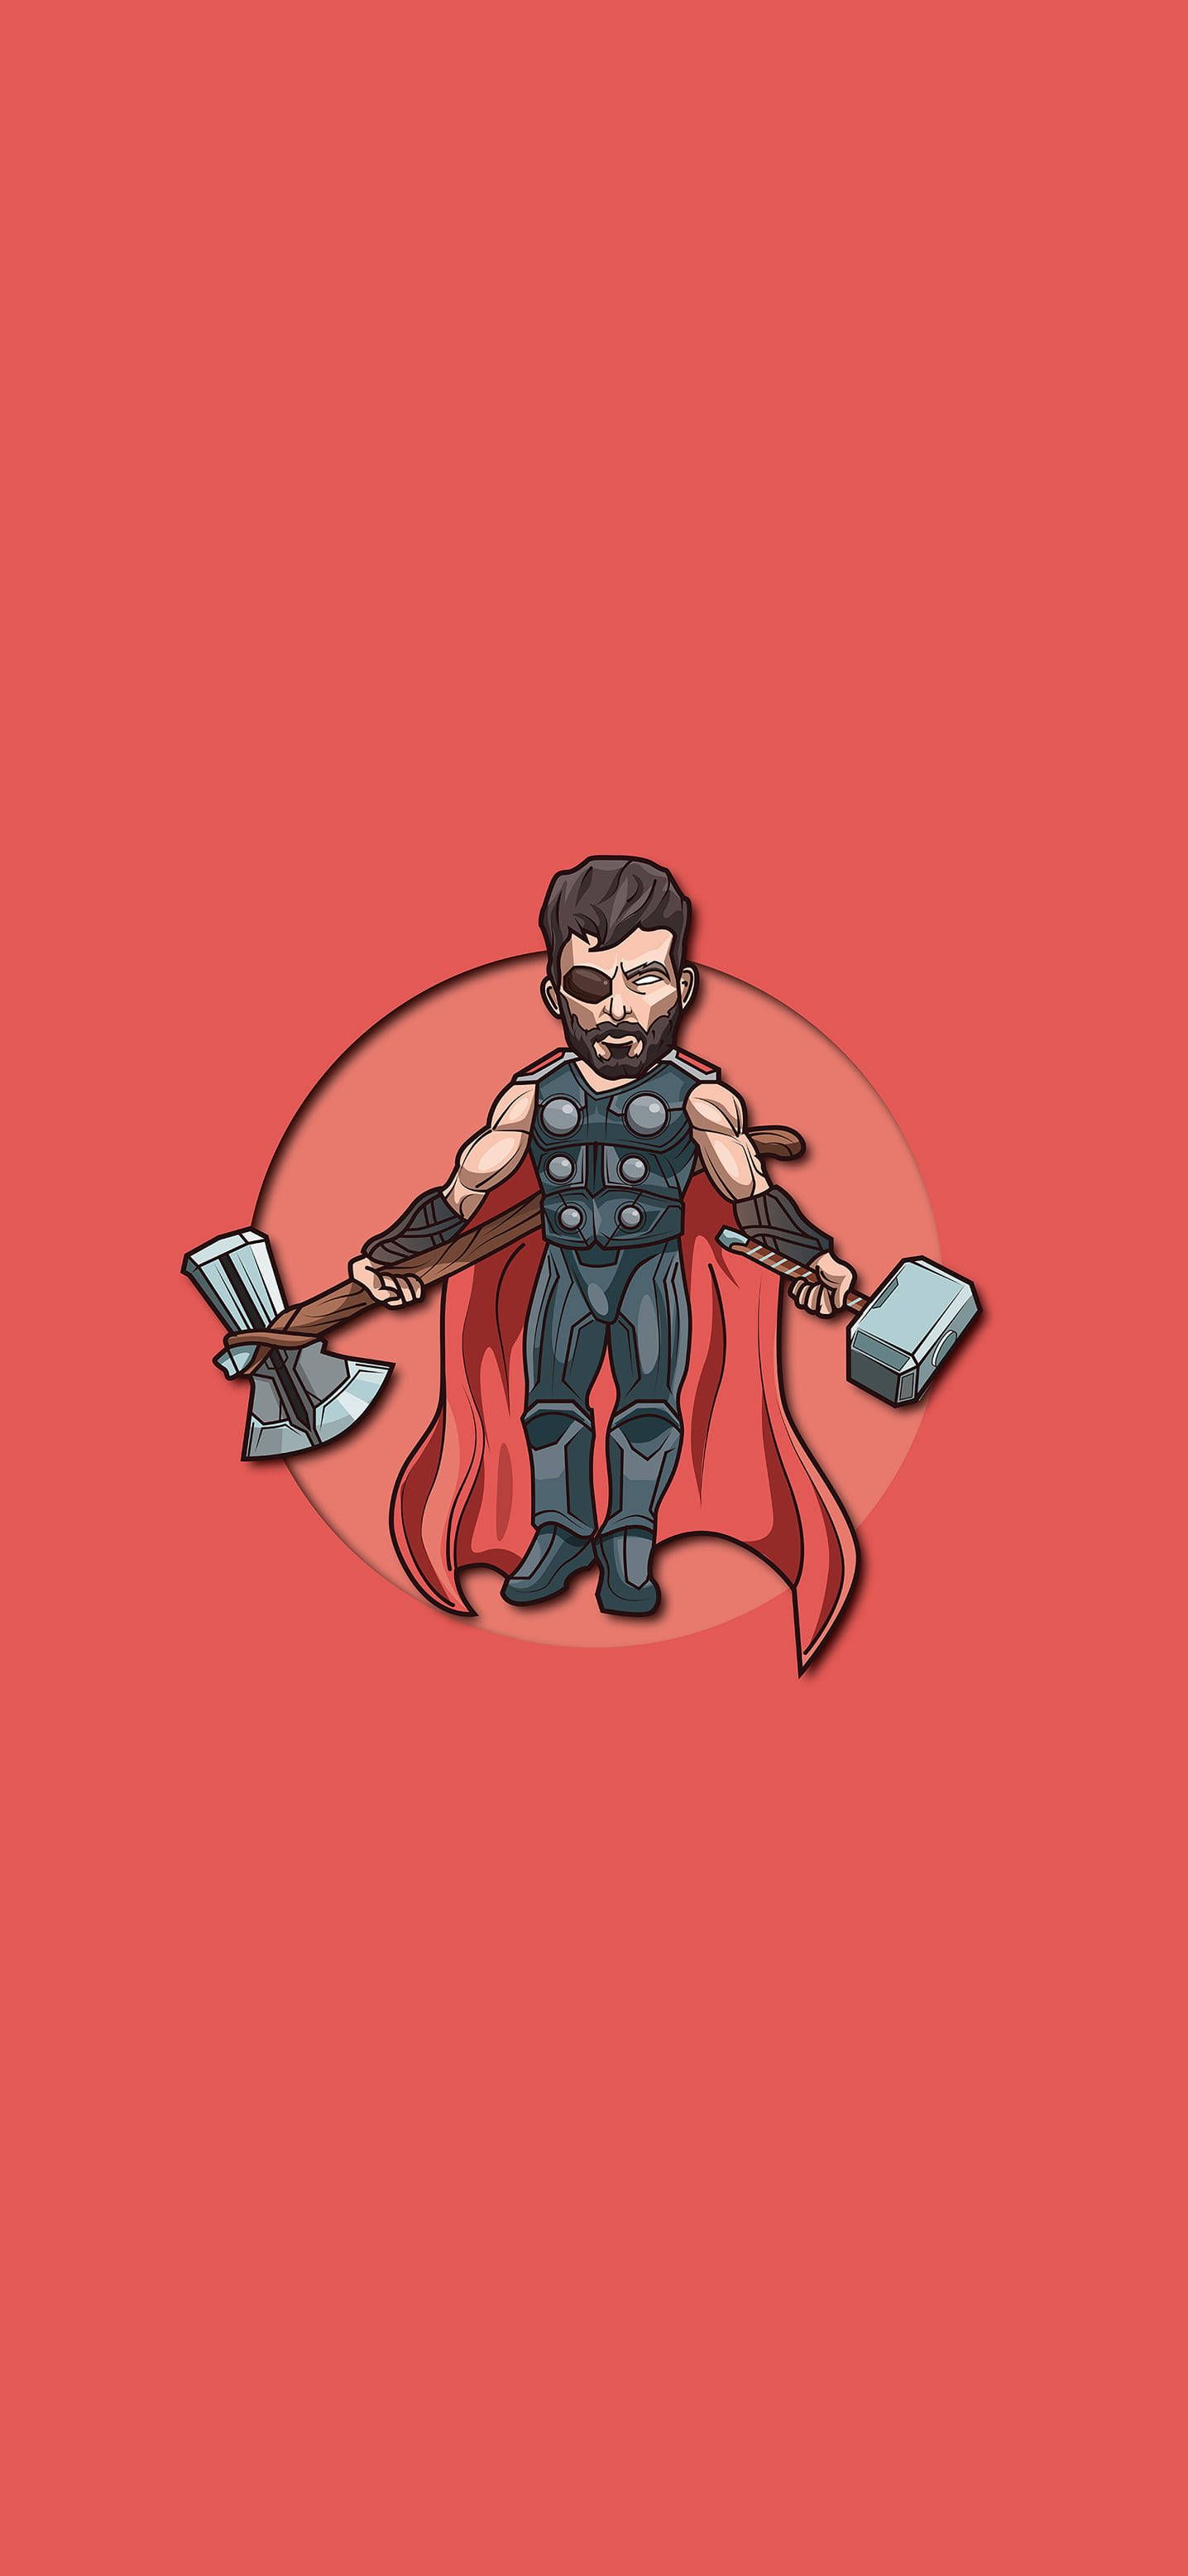  Thor Hintergrundbild 1436x3113. Download Marvel Hero Thor Stormbreaker And Hammer Vector Art Wallpaper